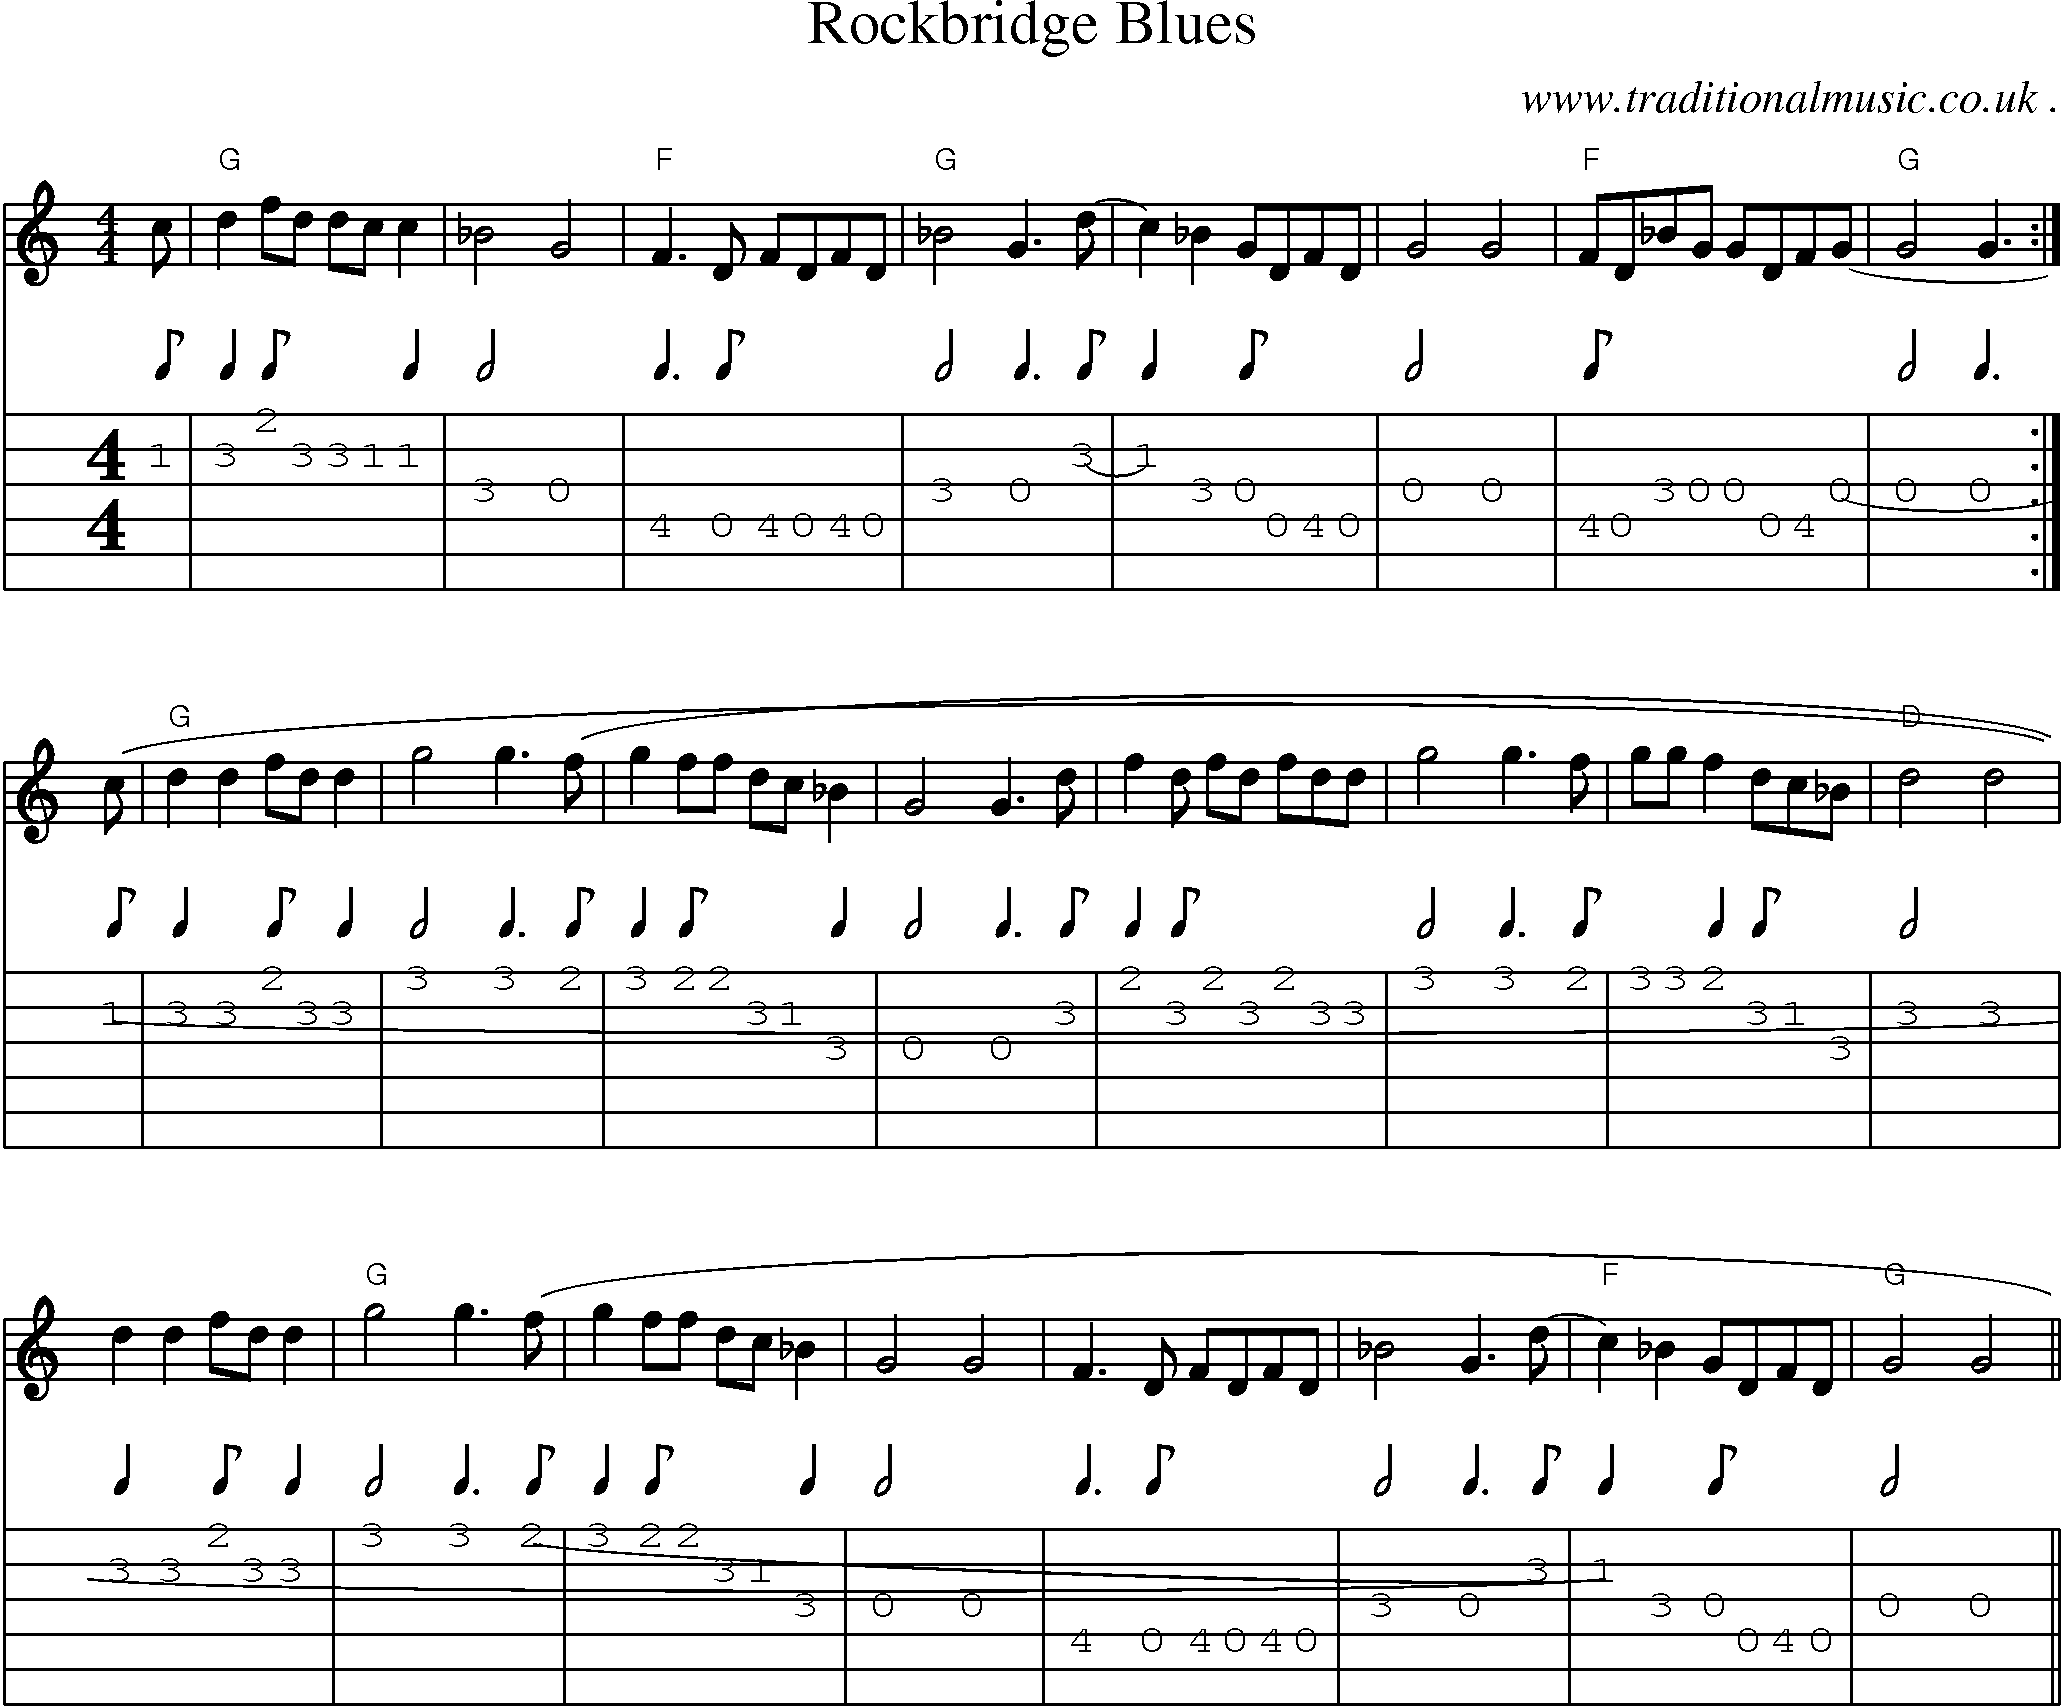 Music Score and Guitar Tabs for Rockbridge Blues